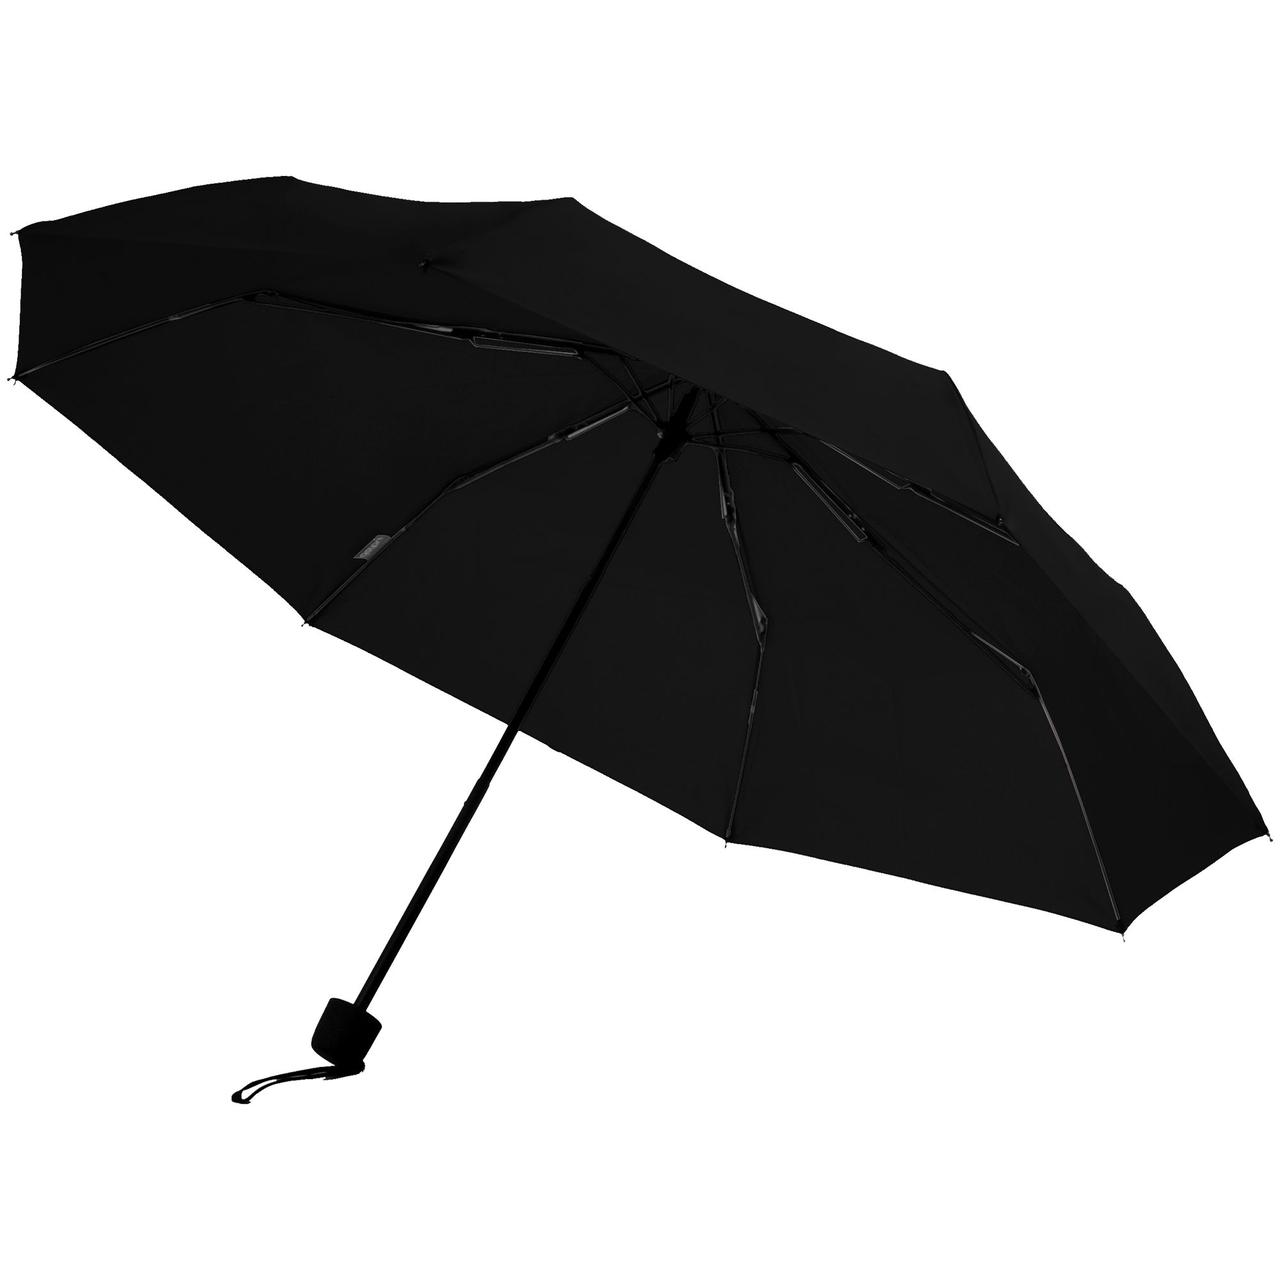 Зонт складной Hit Mini, черный (артикул 11839.30), фото 1